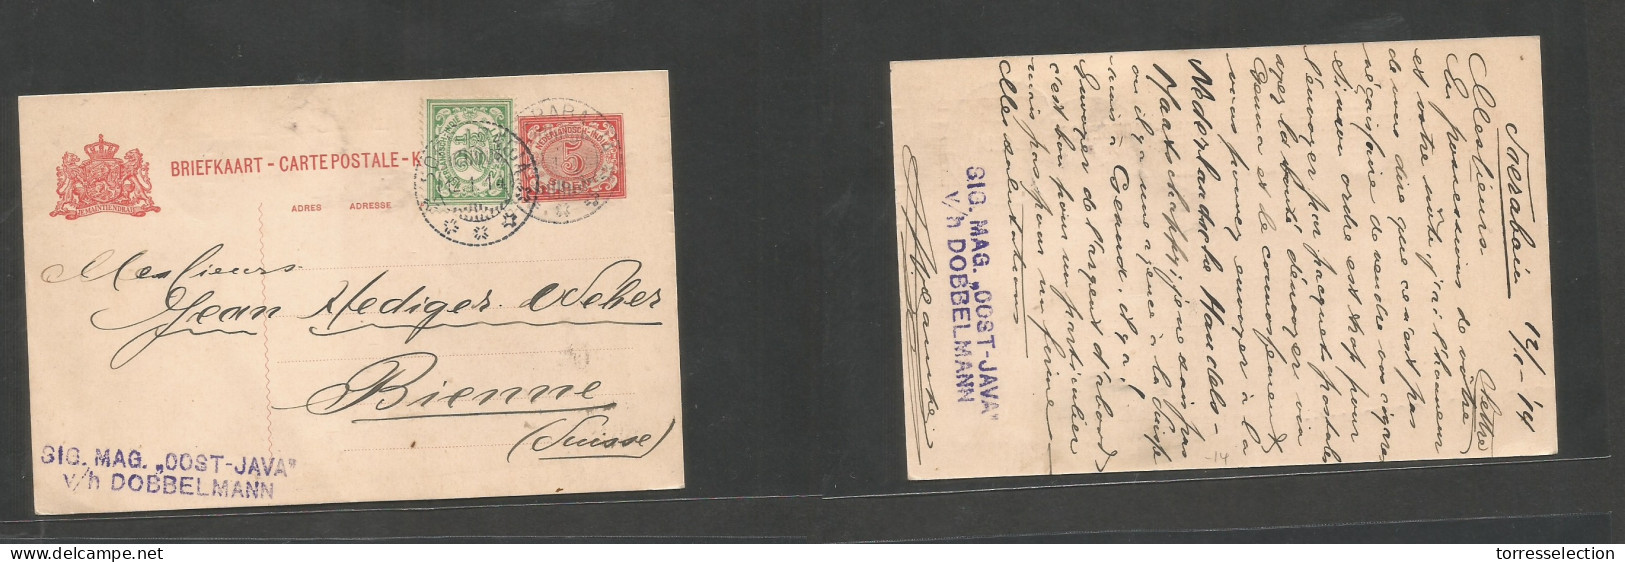 DUTCH INDIES. 1914 (12 Apr) Soerabaja - Switzerland, Bienne 5c Red Stat Card + 2 1/2c Green Adtl, Cds. Fine Used. - Nederlands-Indië